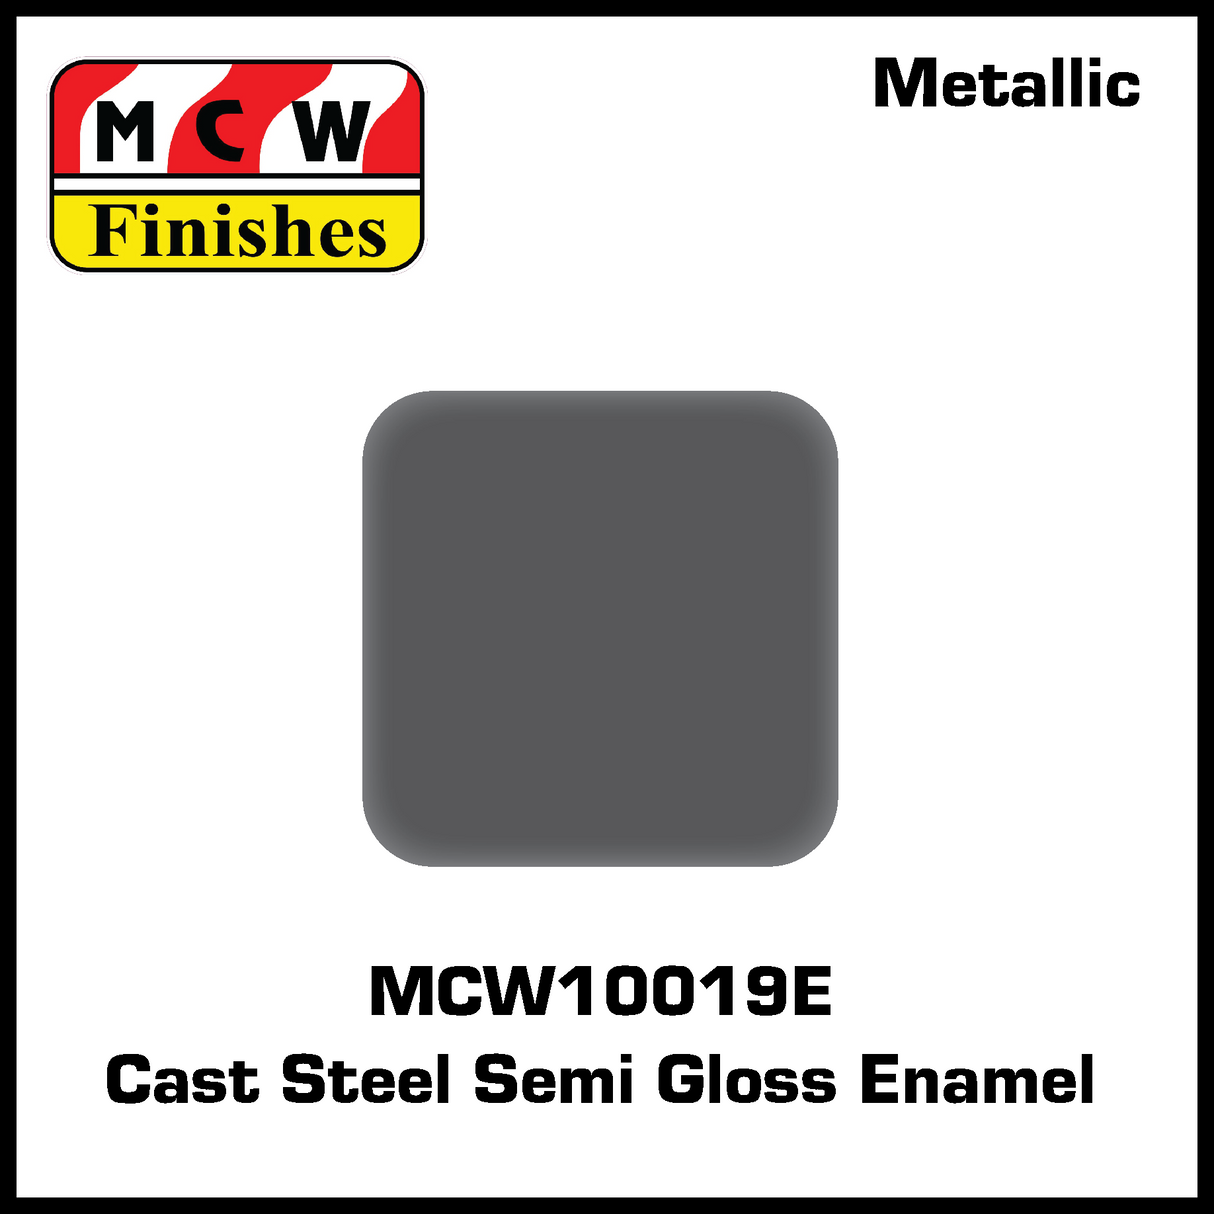 MCW Finishes Cast Steel Enamel